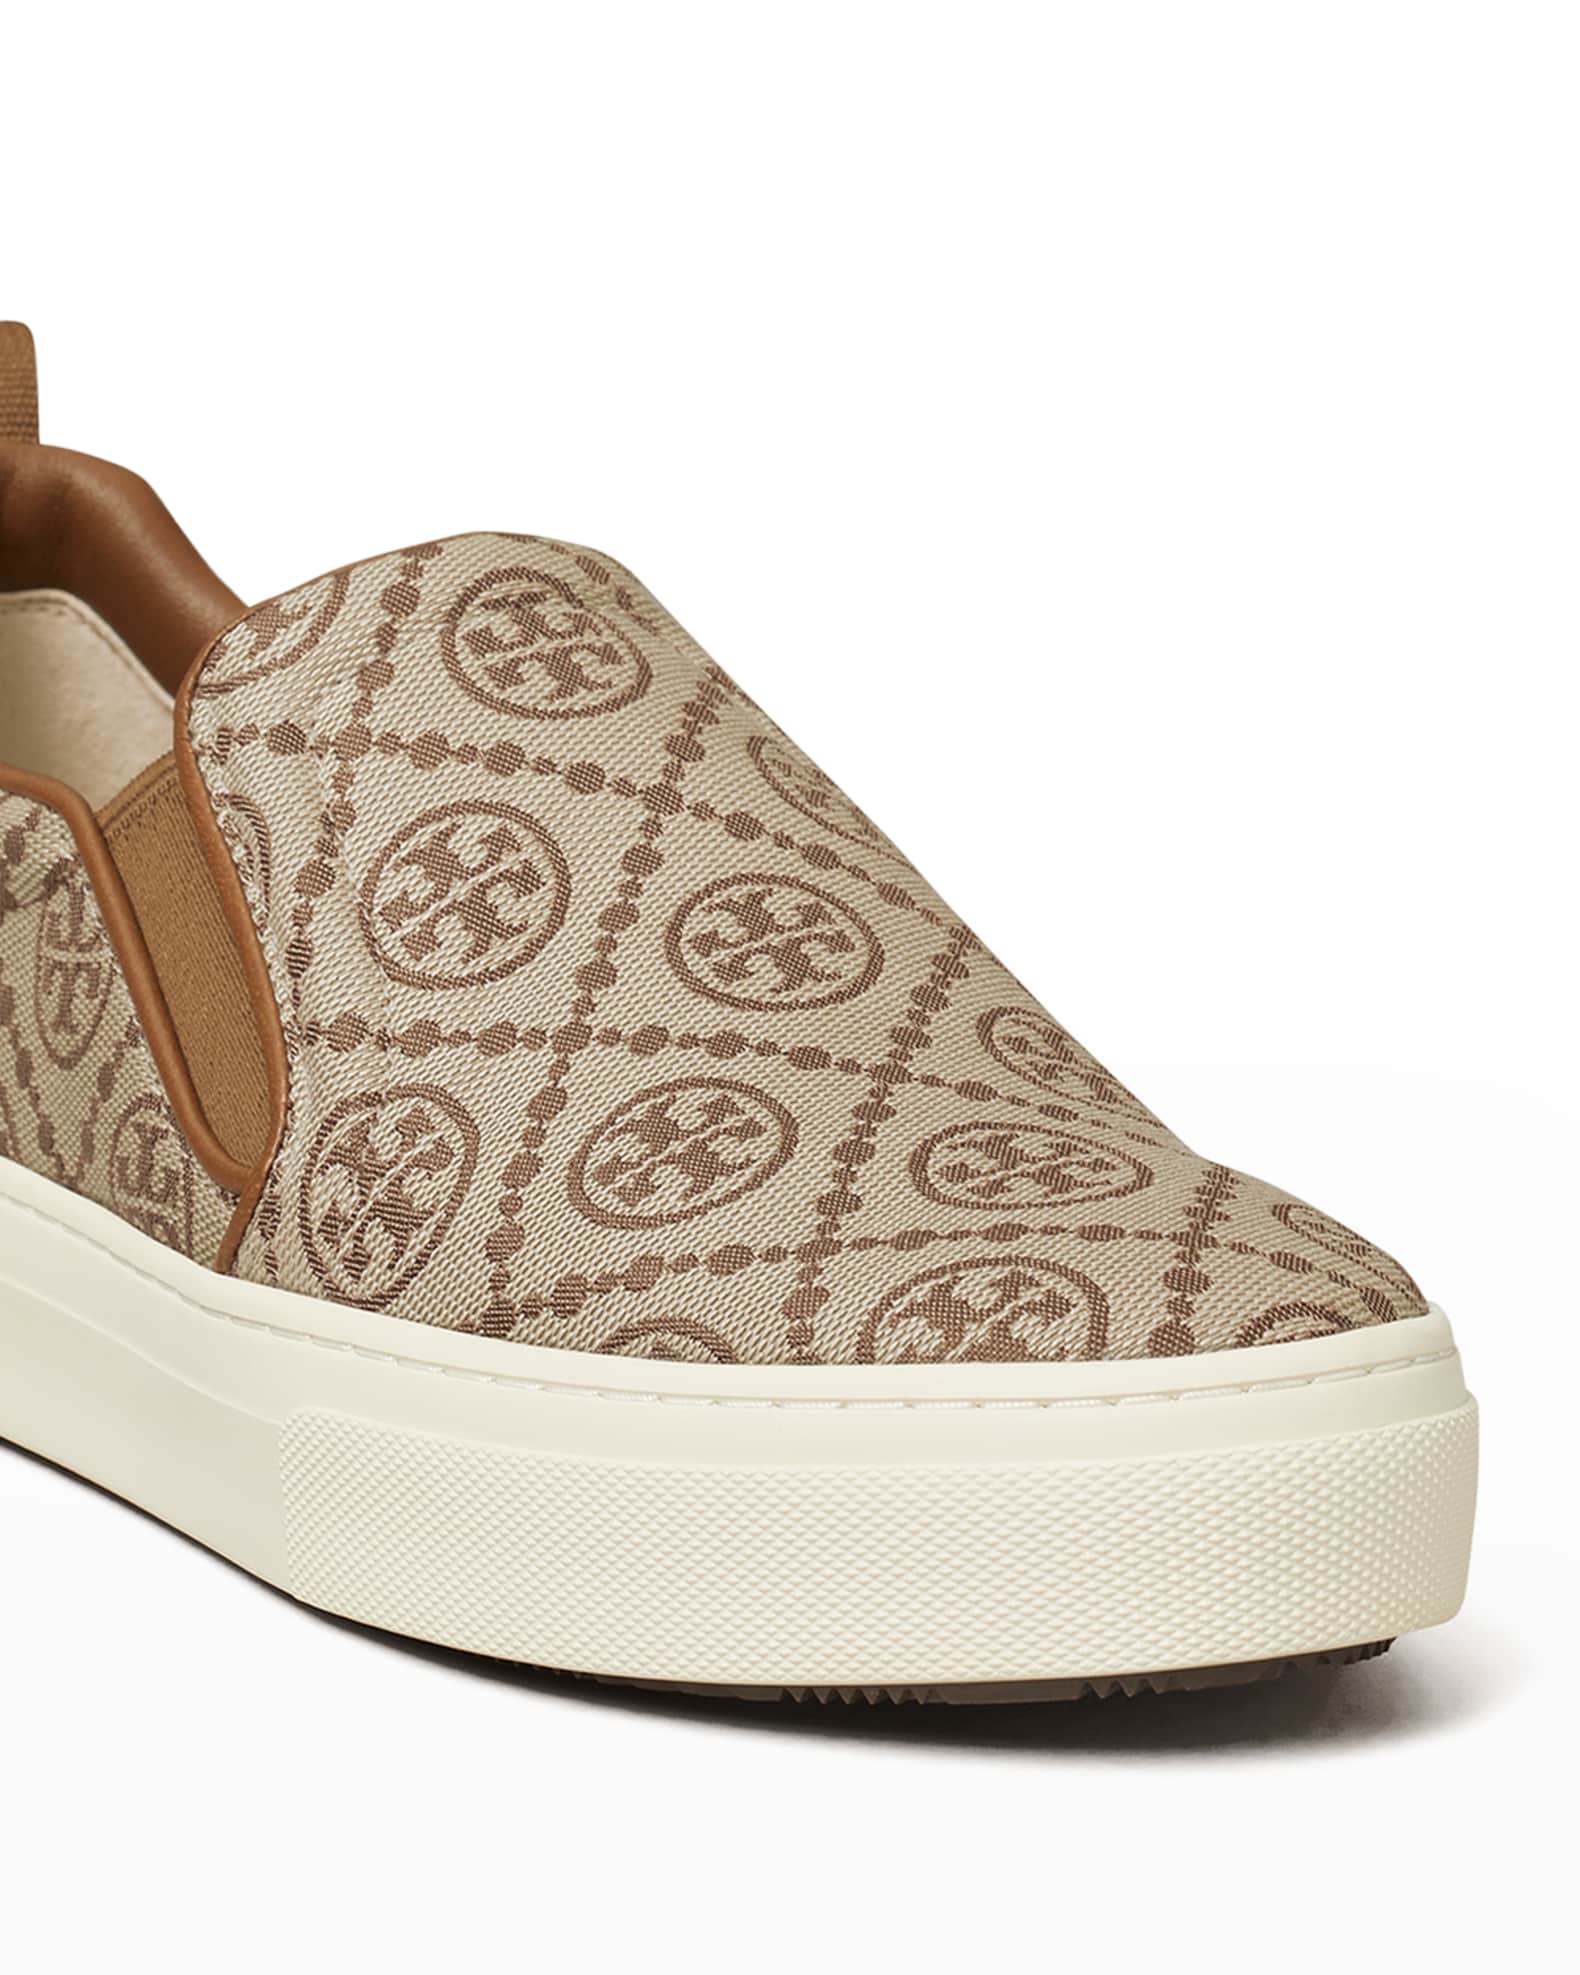 Tory Burch T Monogram Slip-On Sneakers | Neiman Marcus